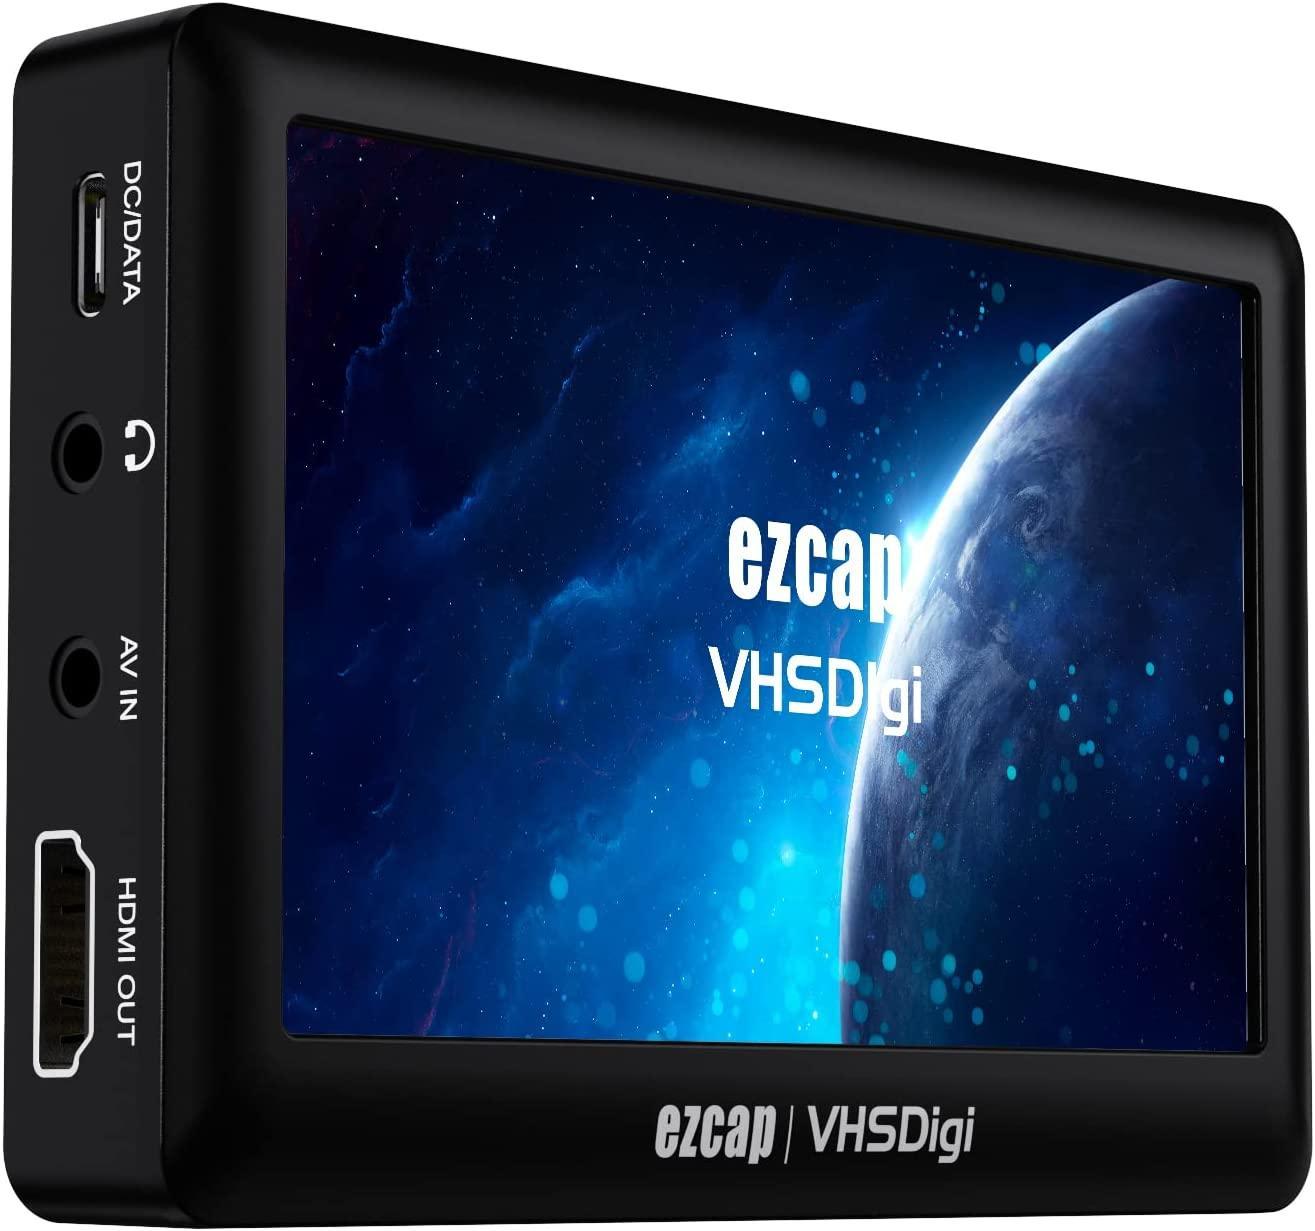 Ezcap Video til Digital Converter, CVBS Video Recorder med LCD-skjerm, Portable Composite CVBS AV Video Recorder Analog til Digital Converter